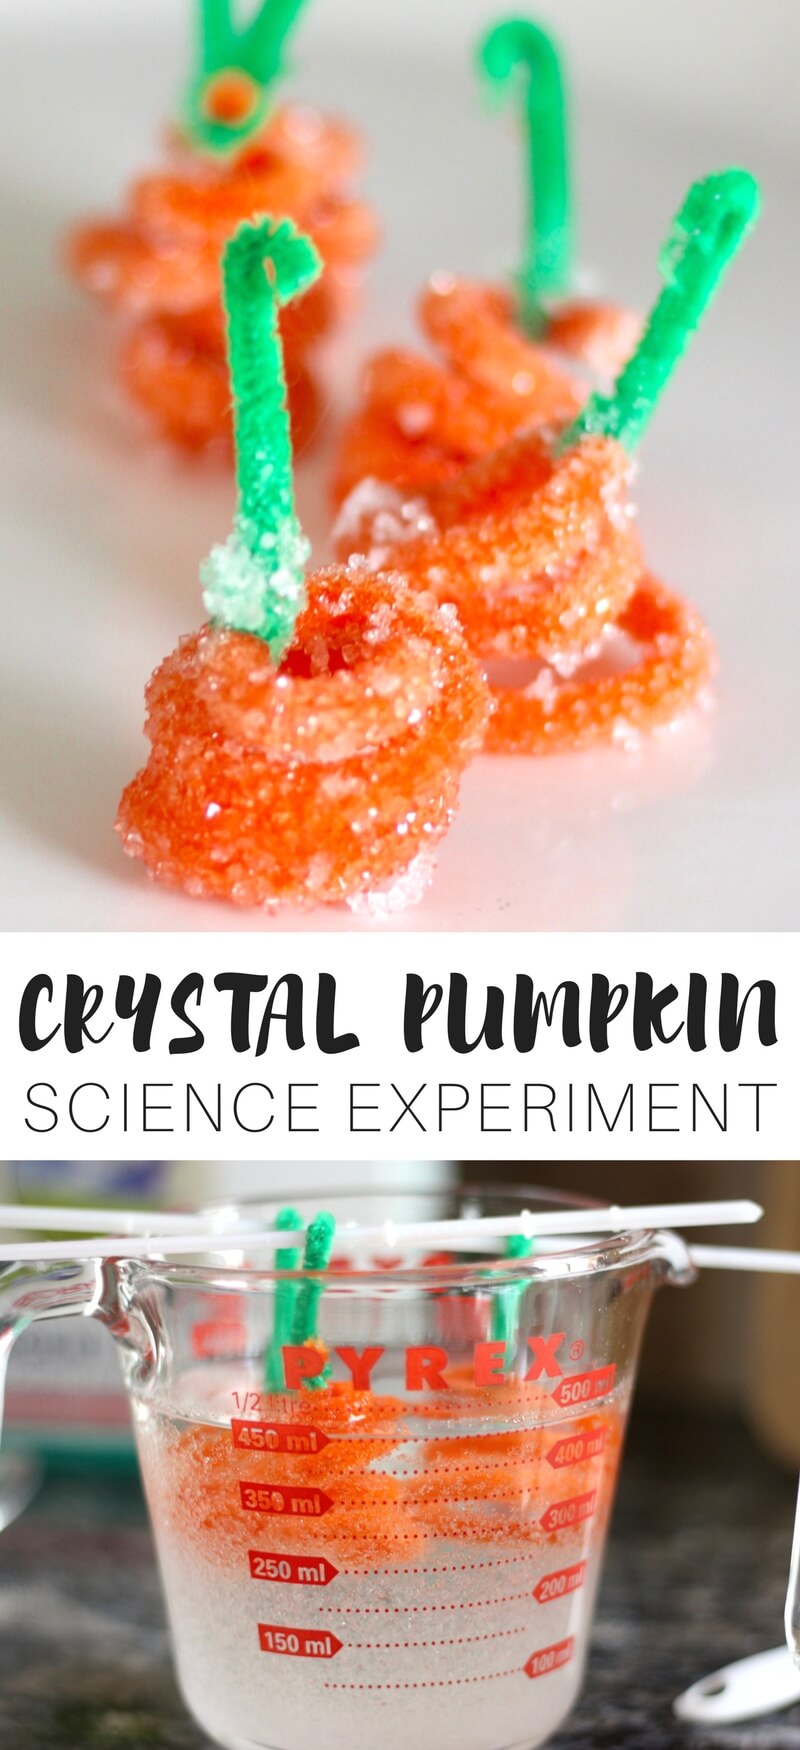 Pumpkin Crystal Science esperimentua 5 Pumpkins jarduerarako